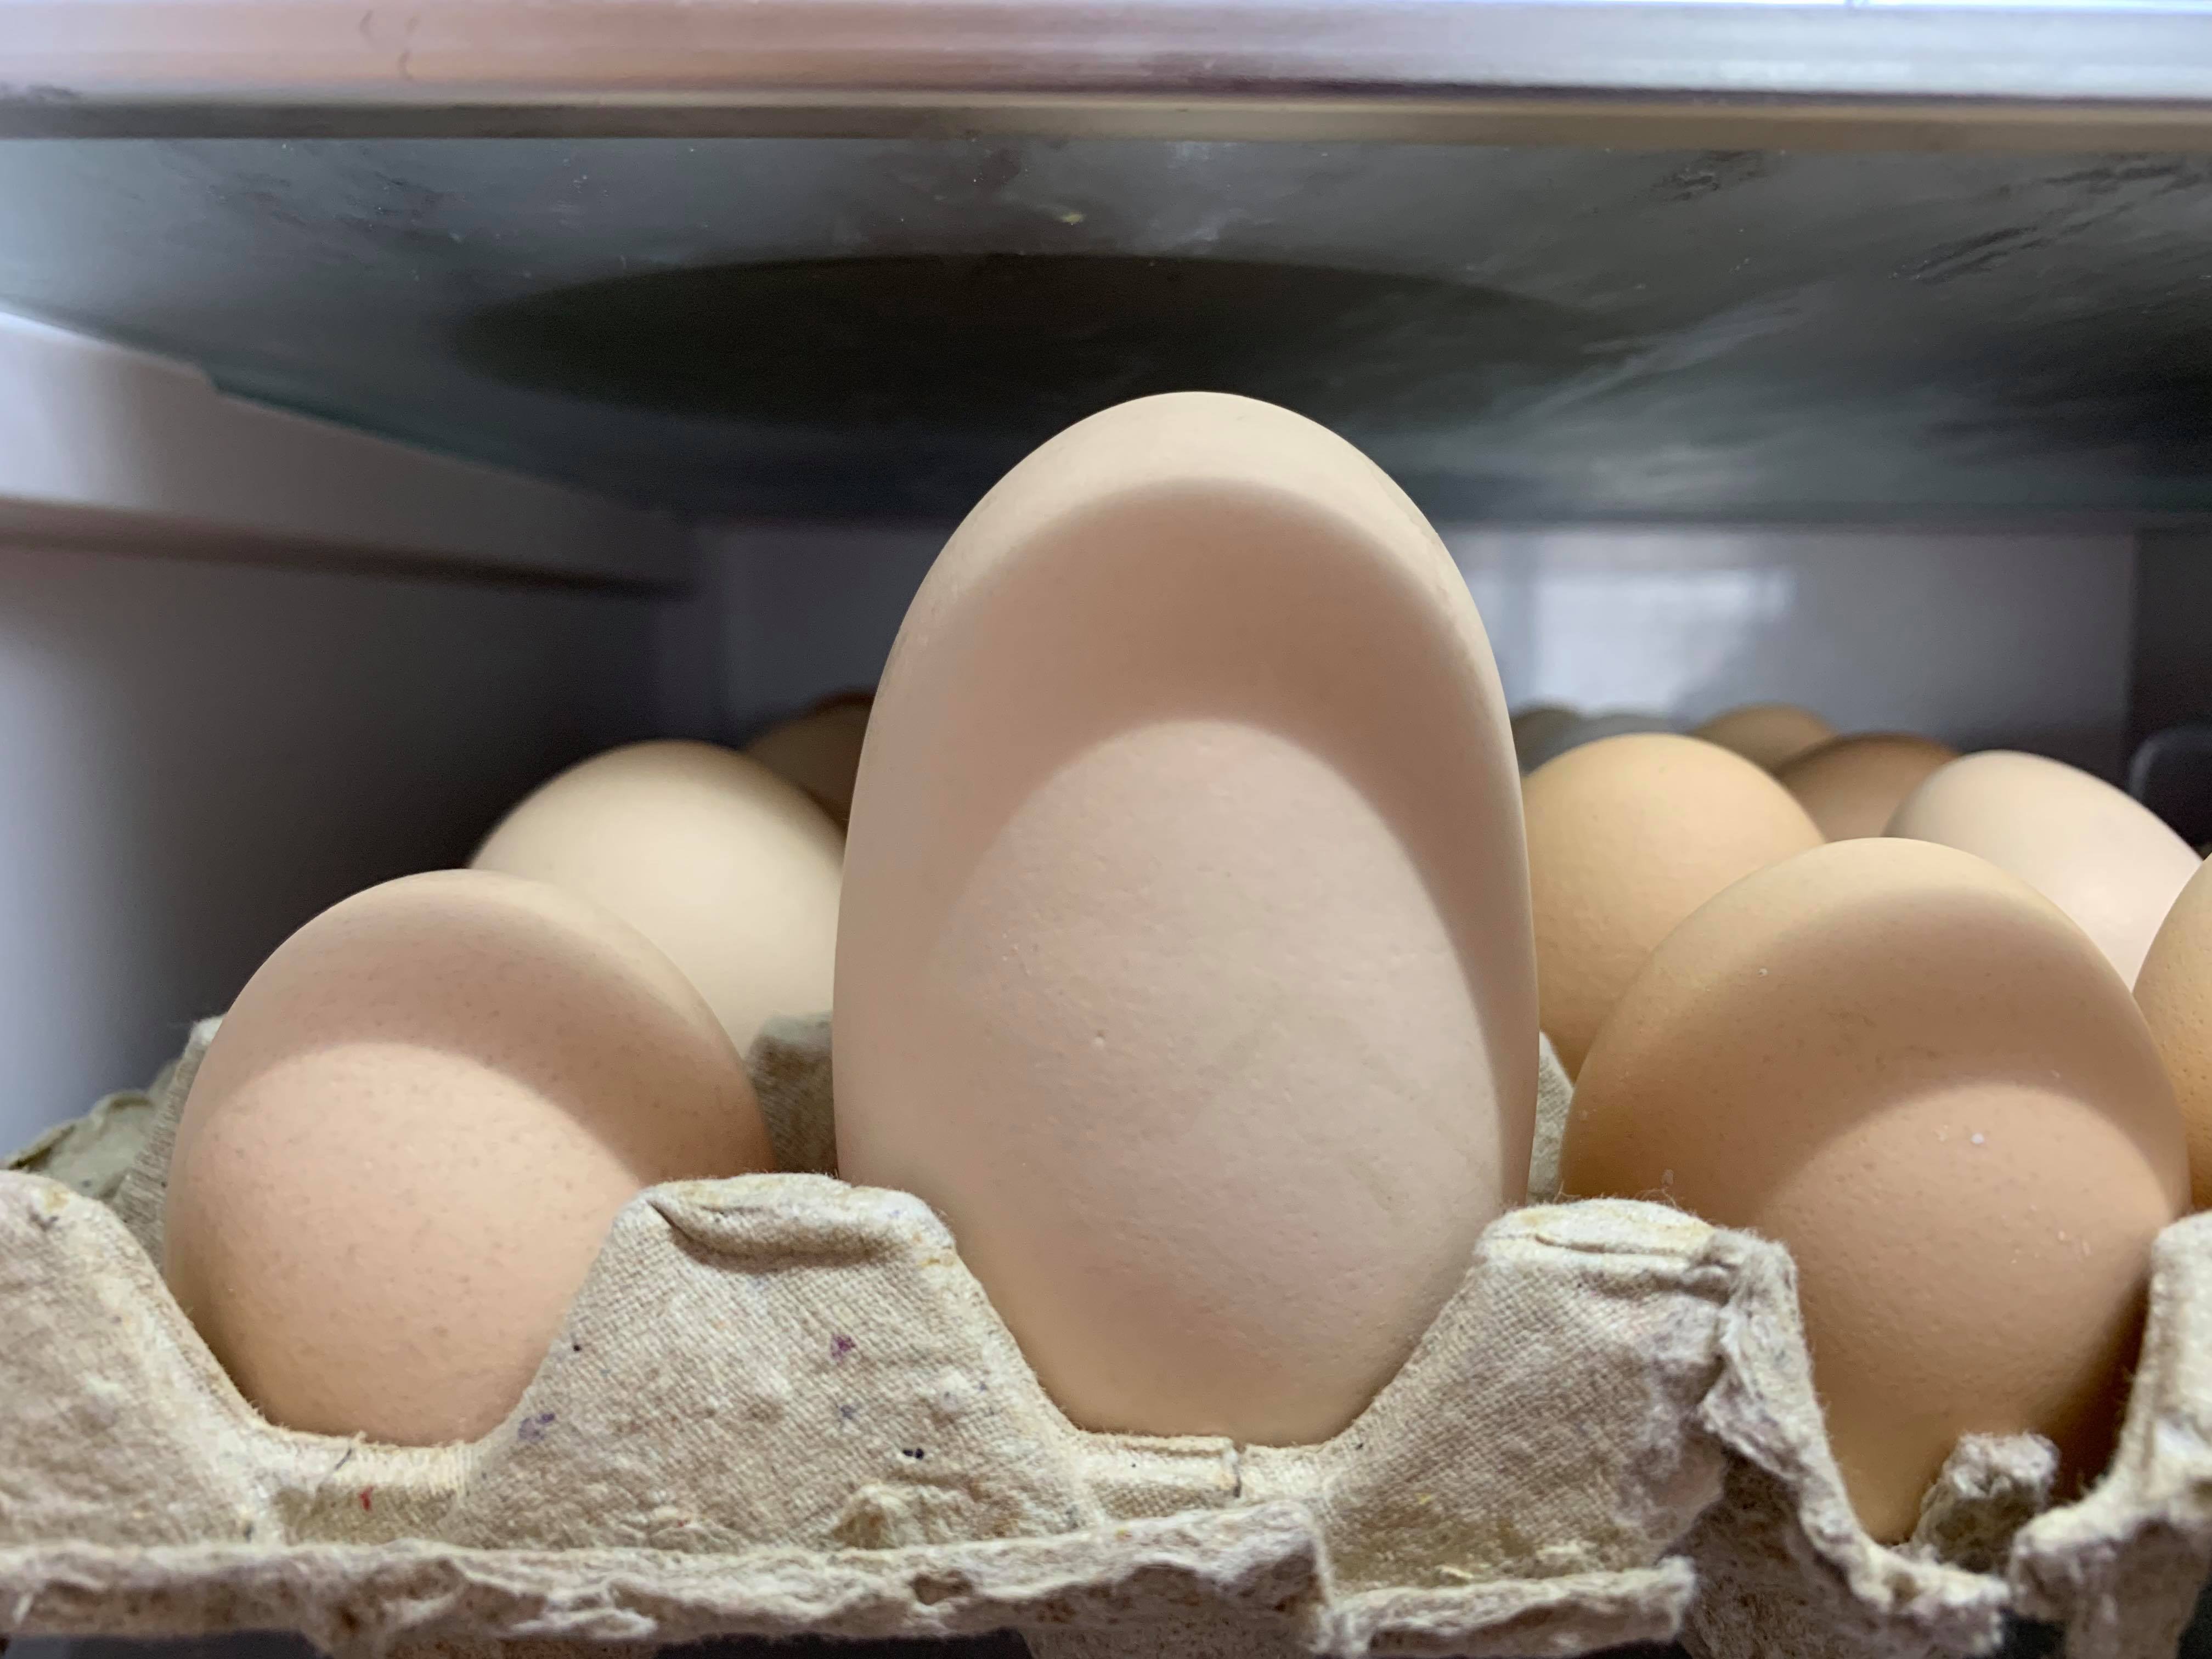 В Запорожской области курица-рекордсмен удивляет своих хозяев размером яиц (ФОТО)